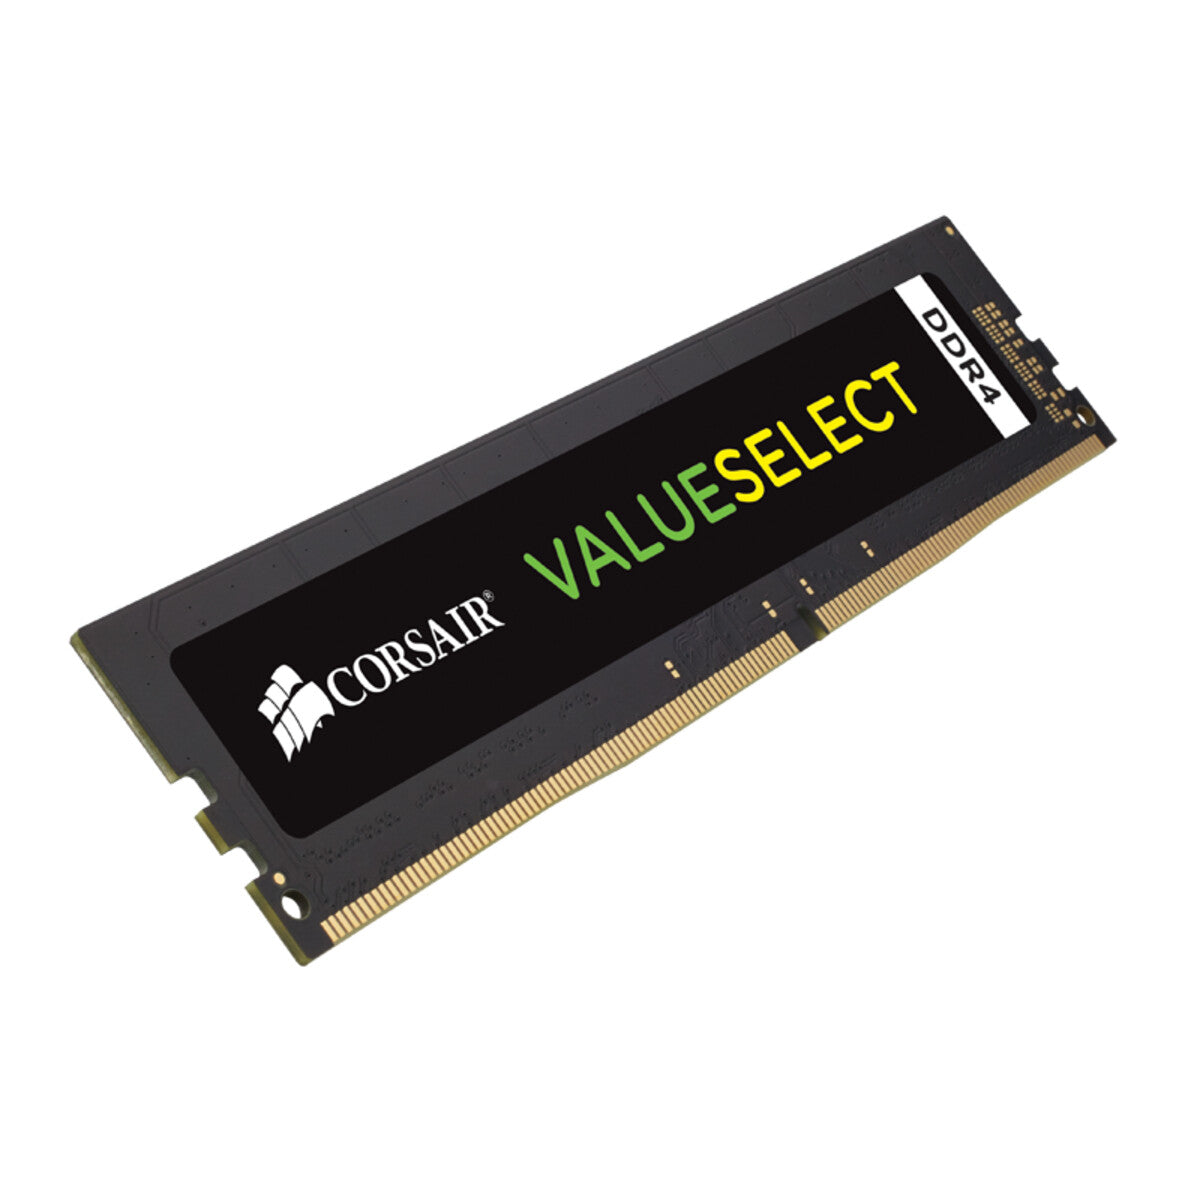 Corsair ValueSelect - 32 GB DDR4 2666 MHz memory module